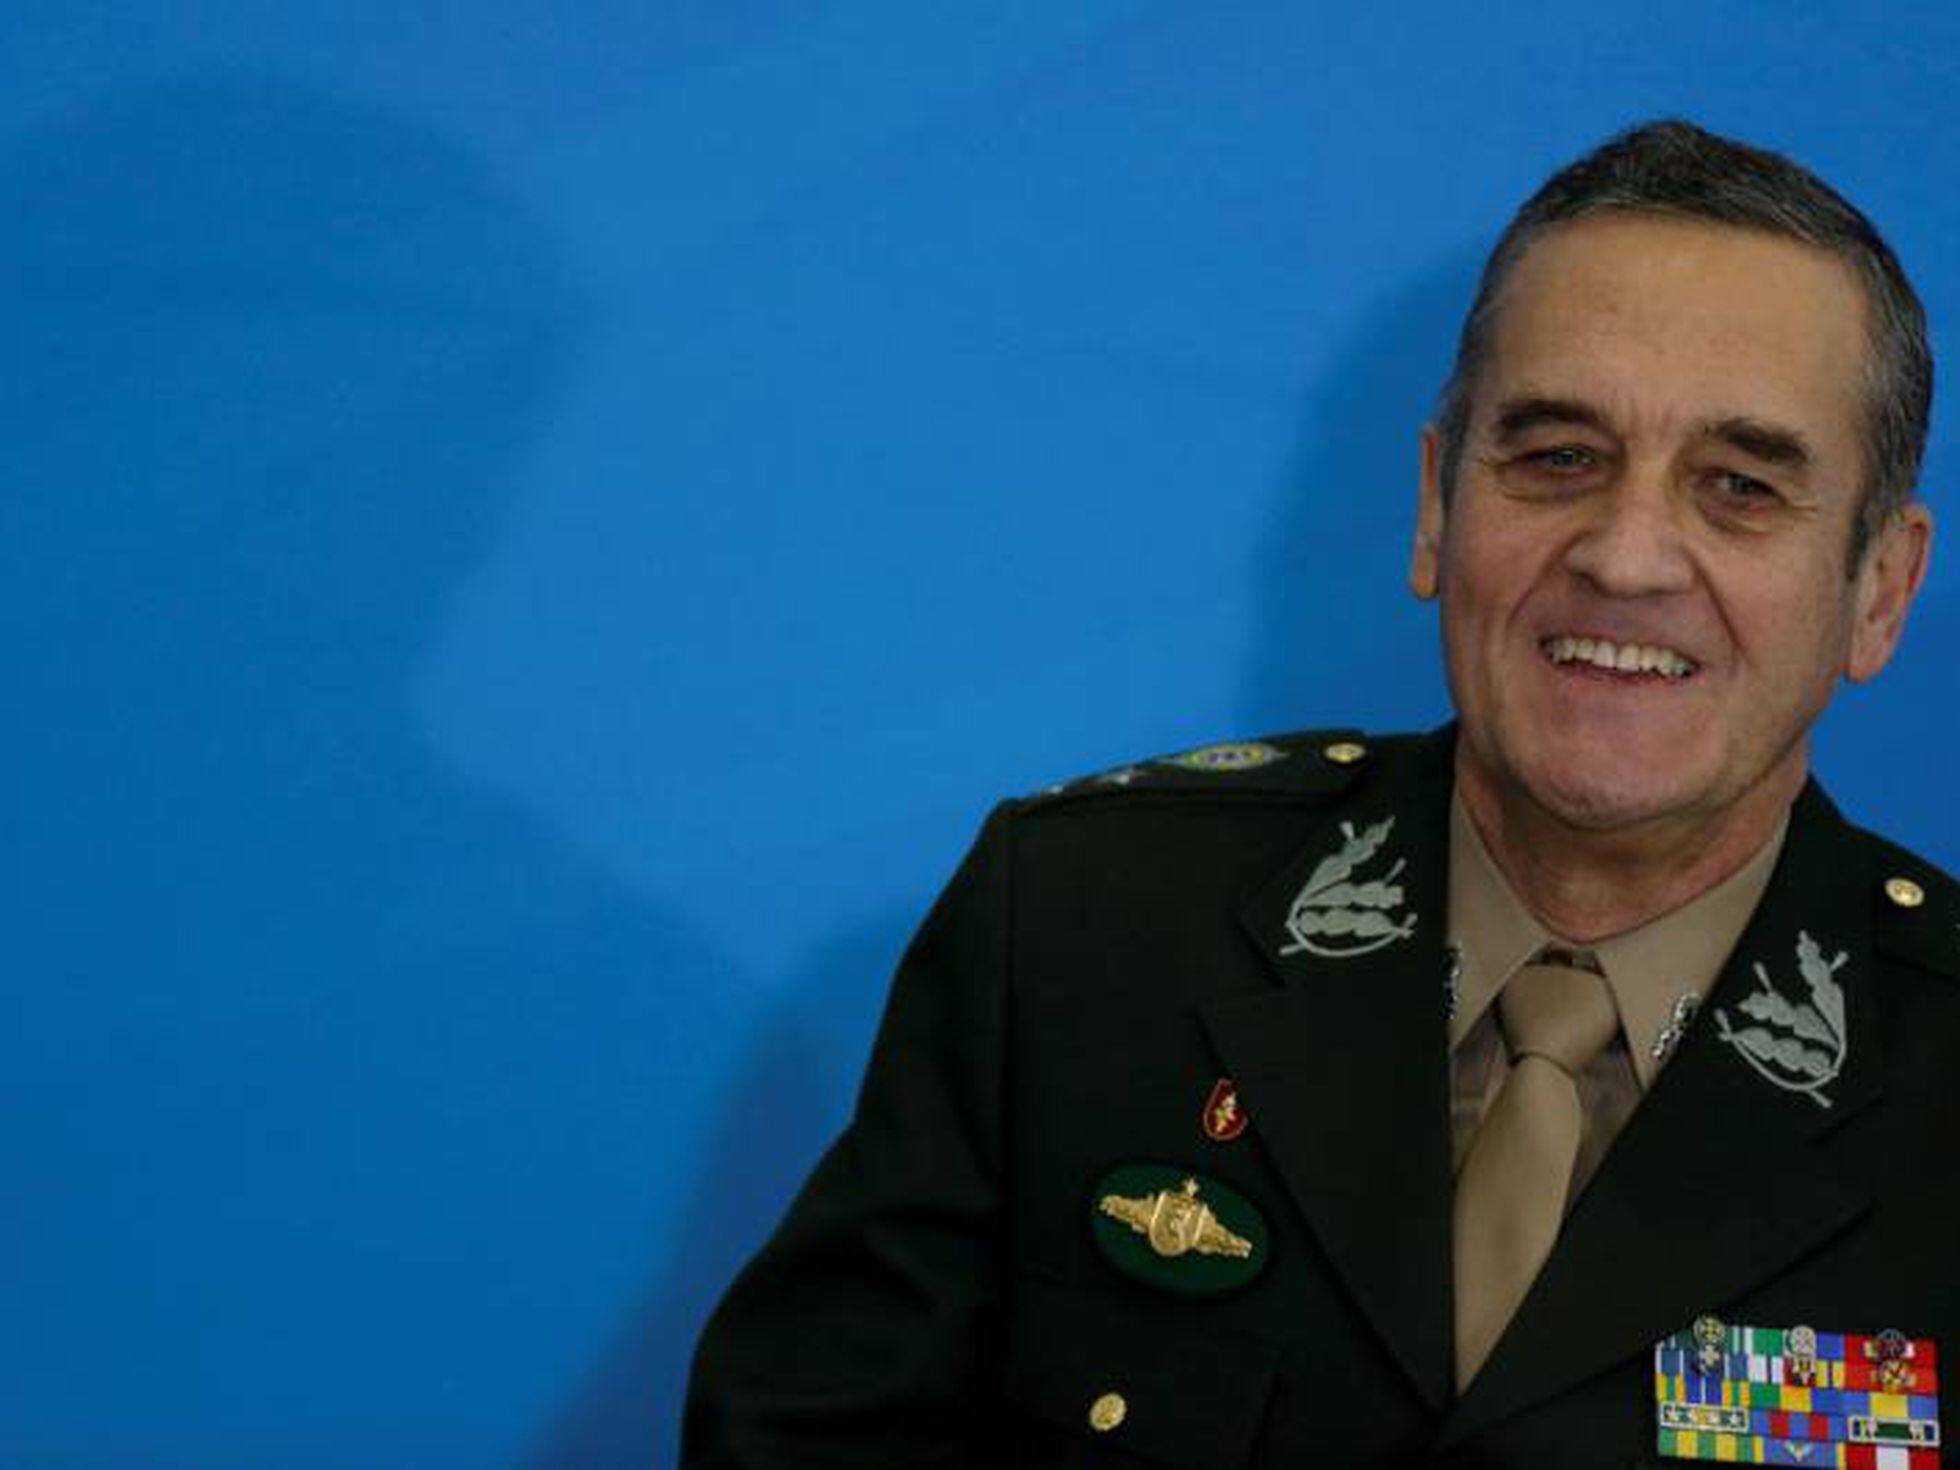 Pela primeira vez, general brasileiro será subordinado ao